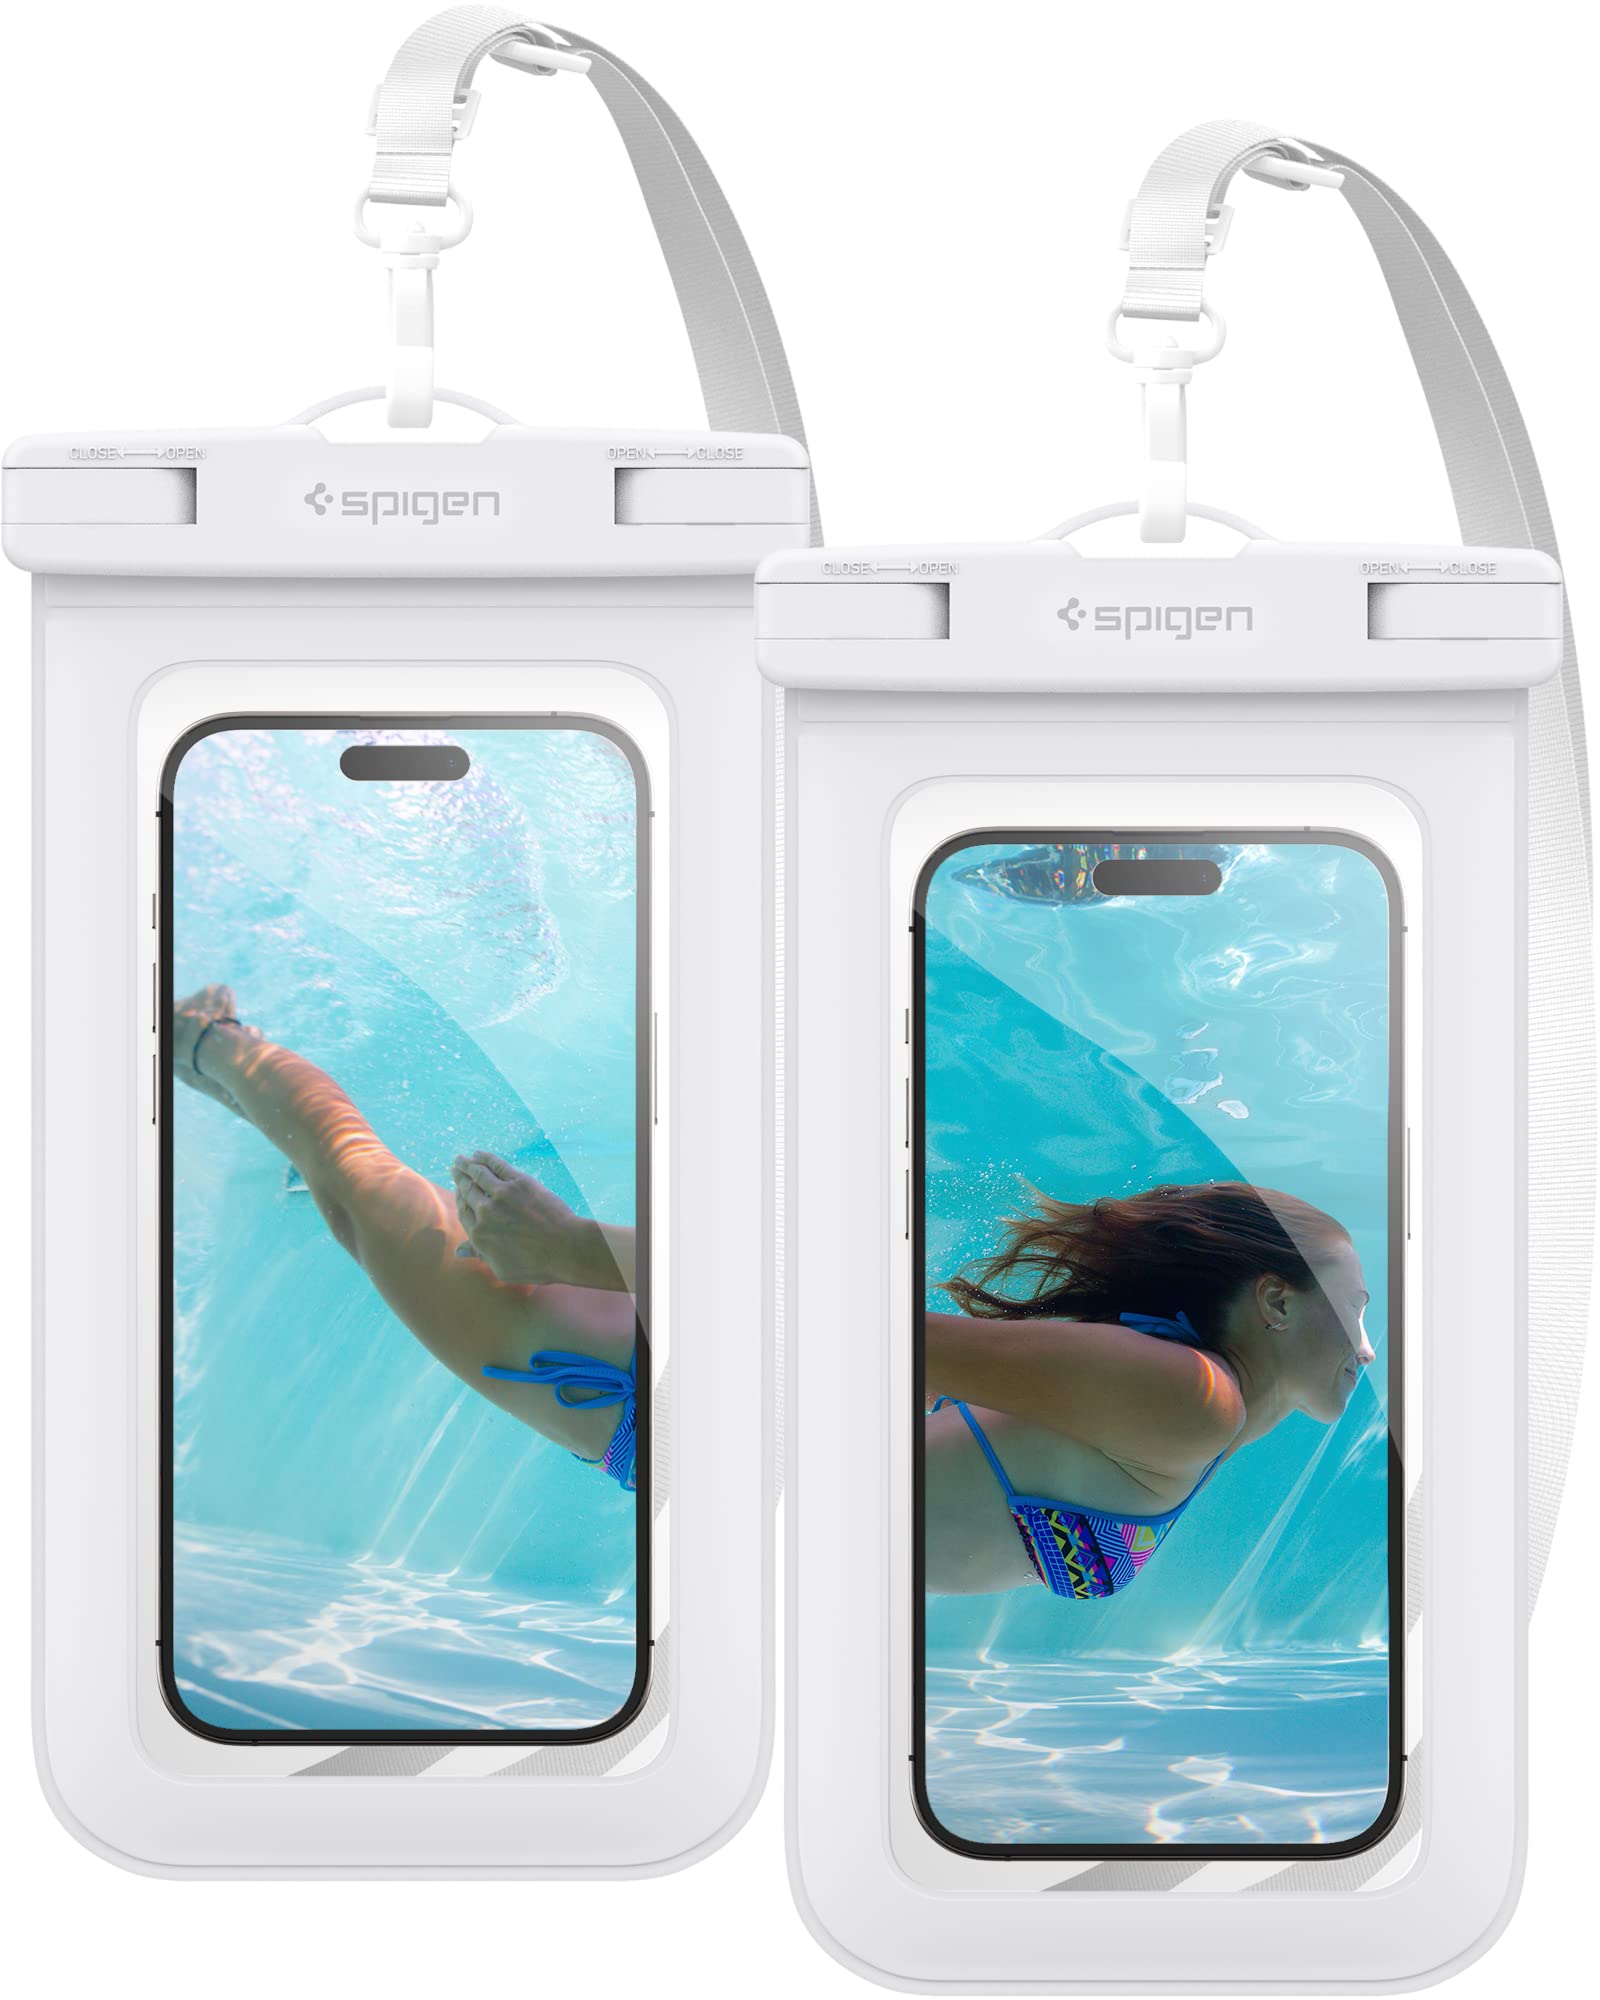 Spigen スマホ 防水ケース 小物 iPhone Android 最大 8.2インチ対応 タッチ可 顔認証 密封、水中撮影 ..